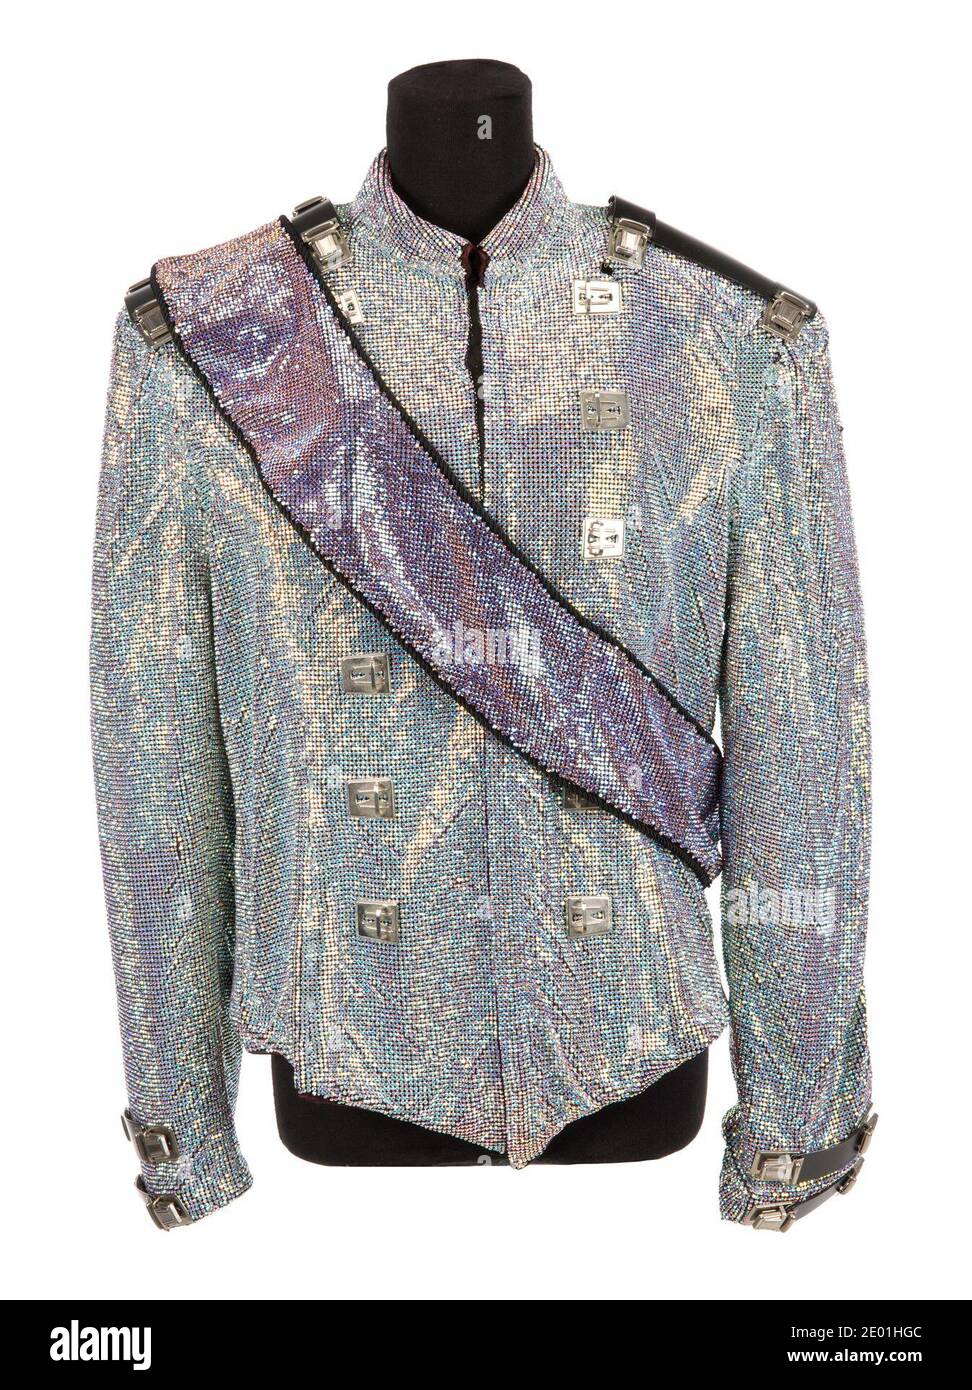 Michael Jackson History Jacket - MJ outfits